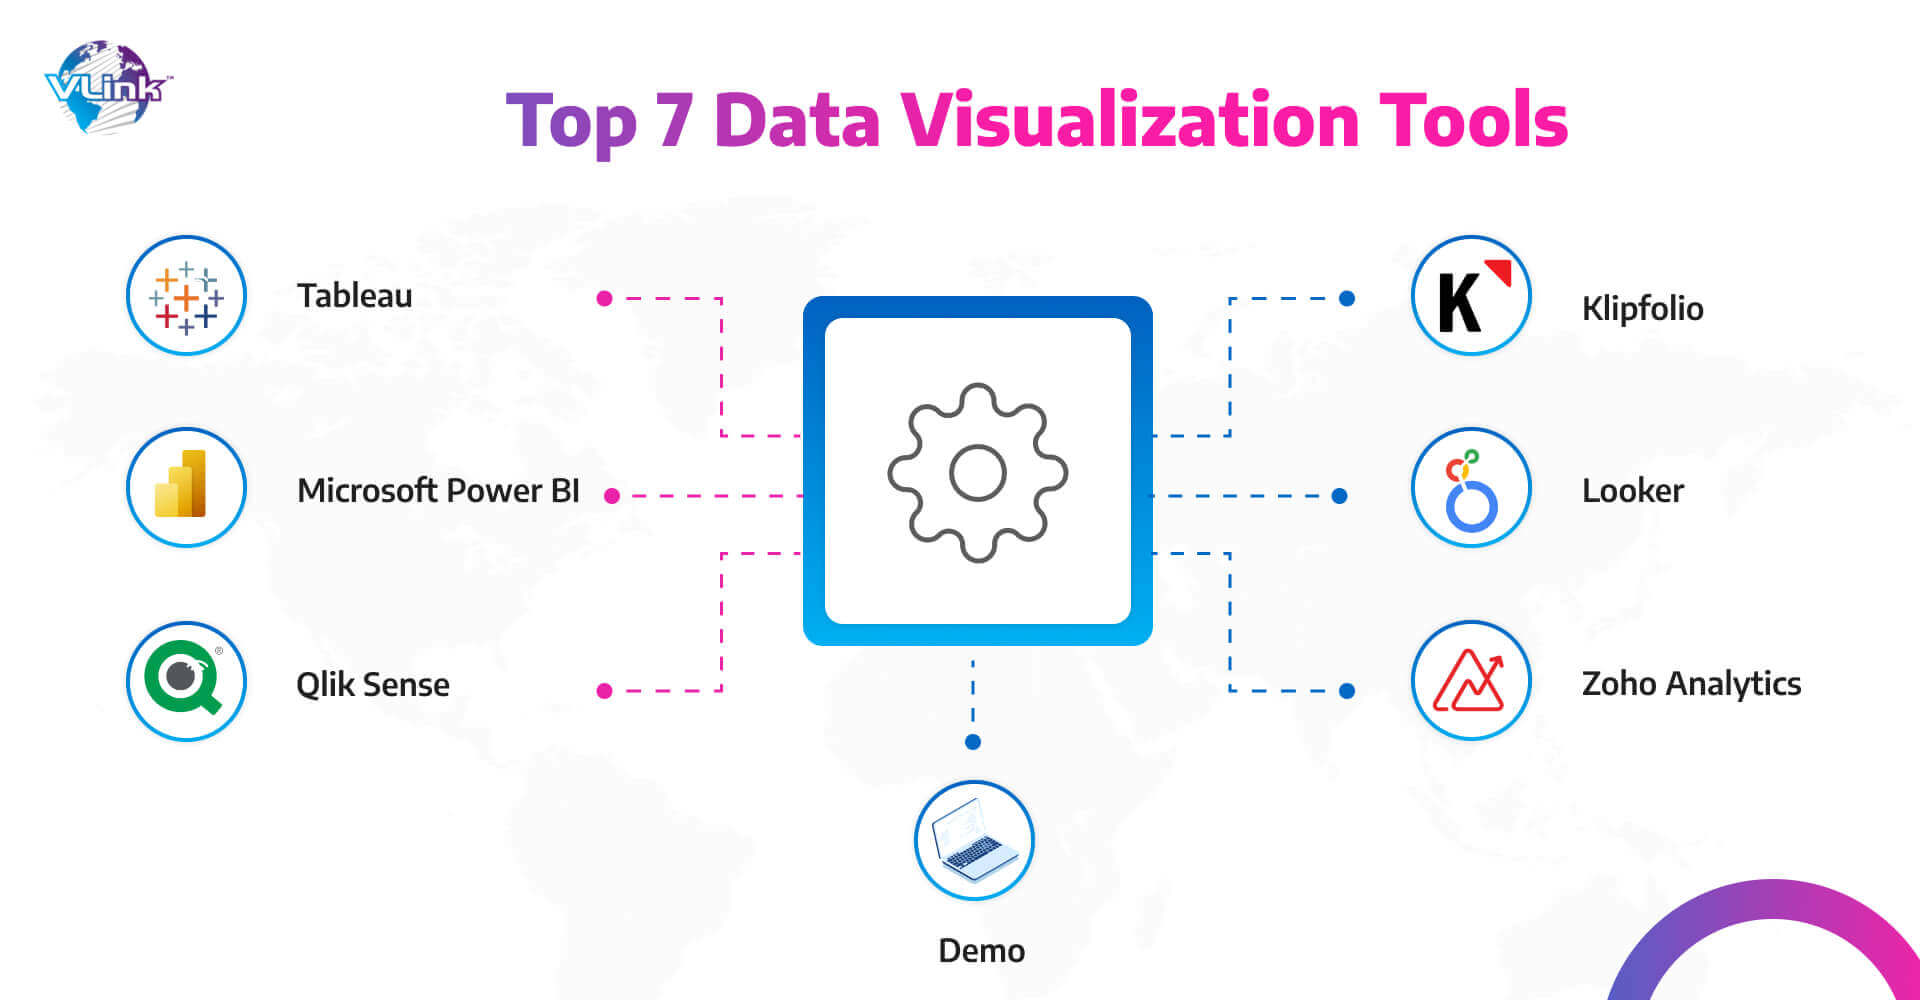 Top 7 Data Visualization Tools